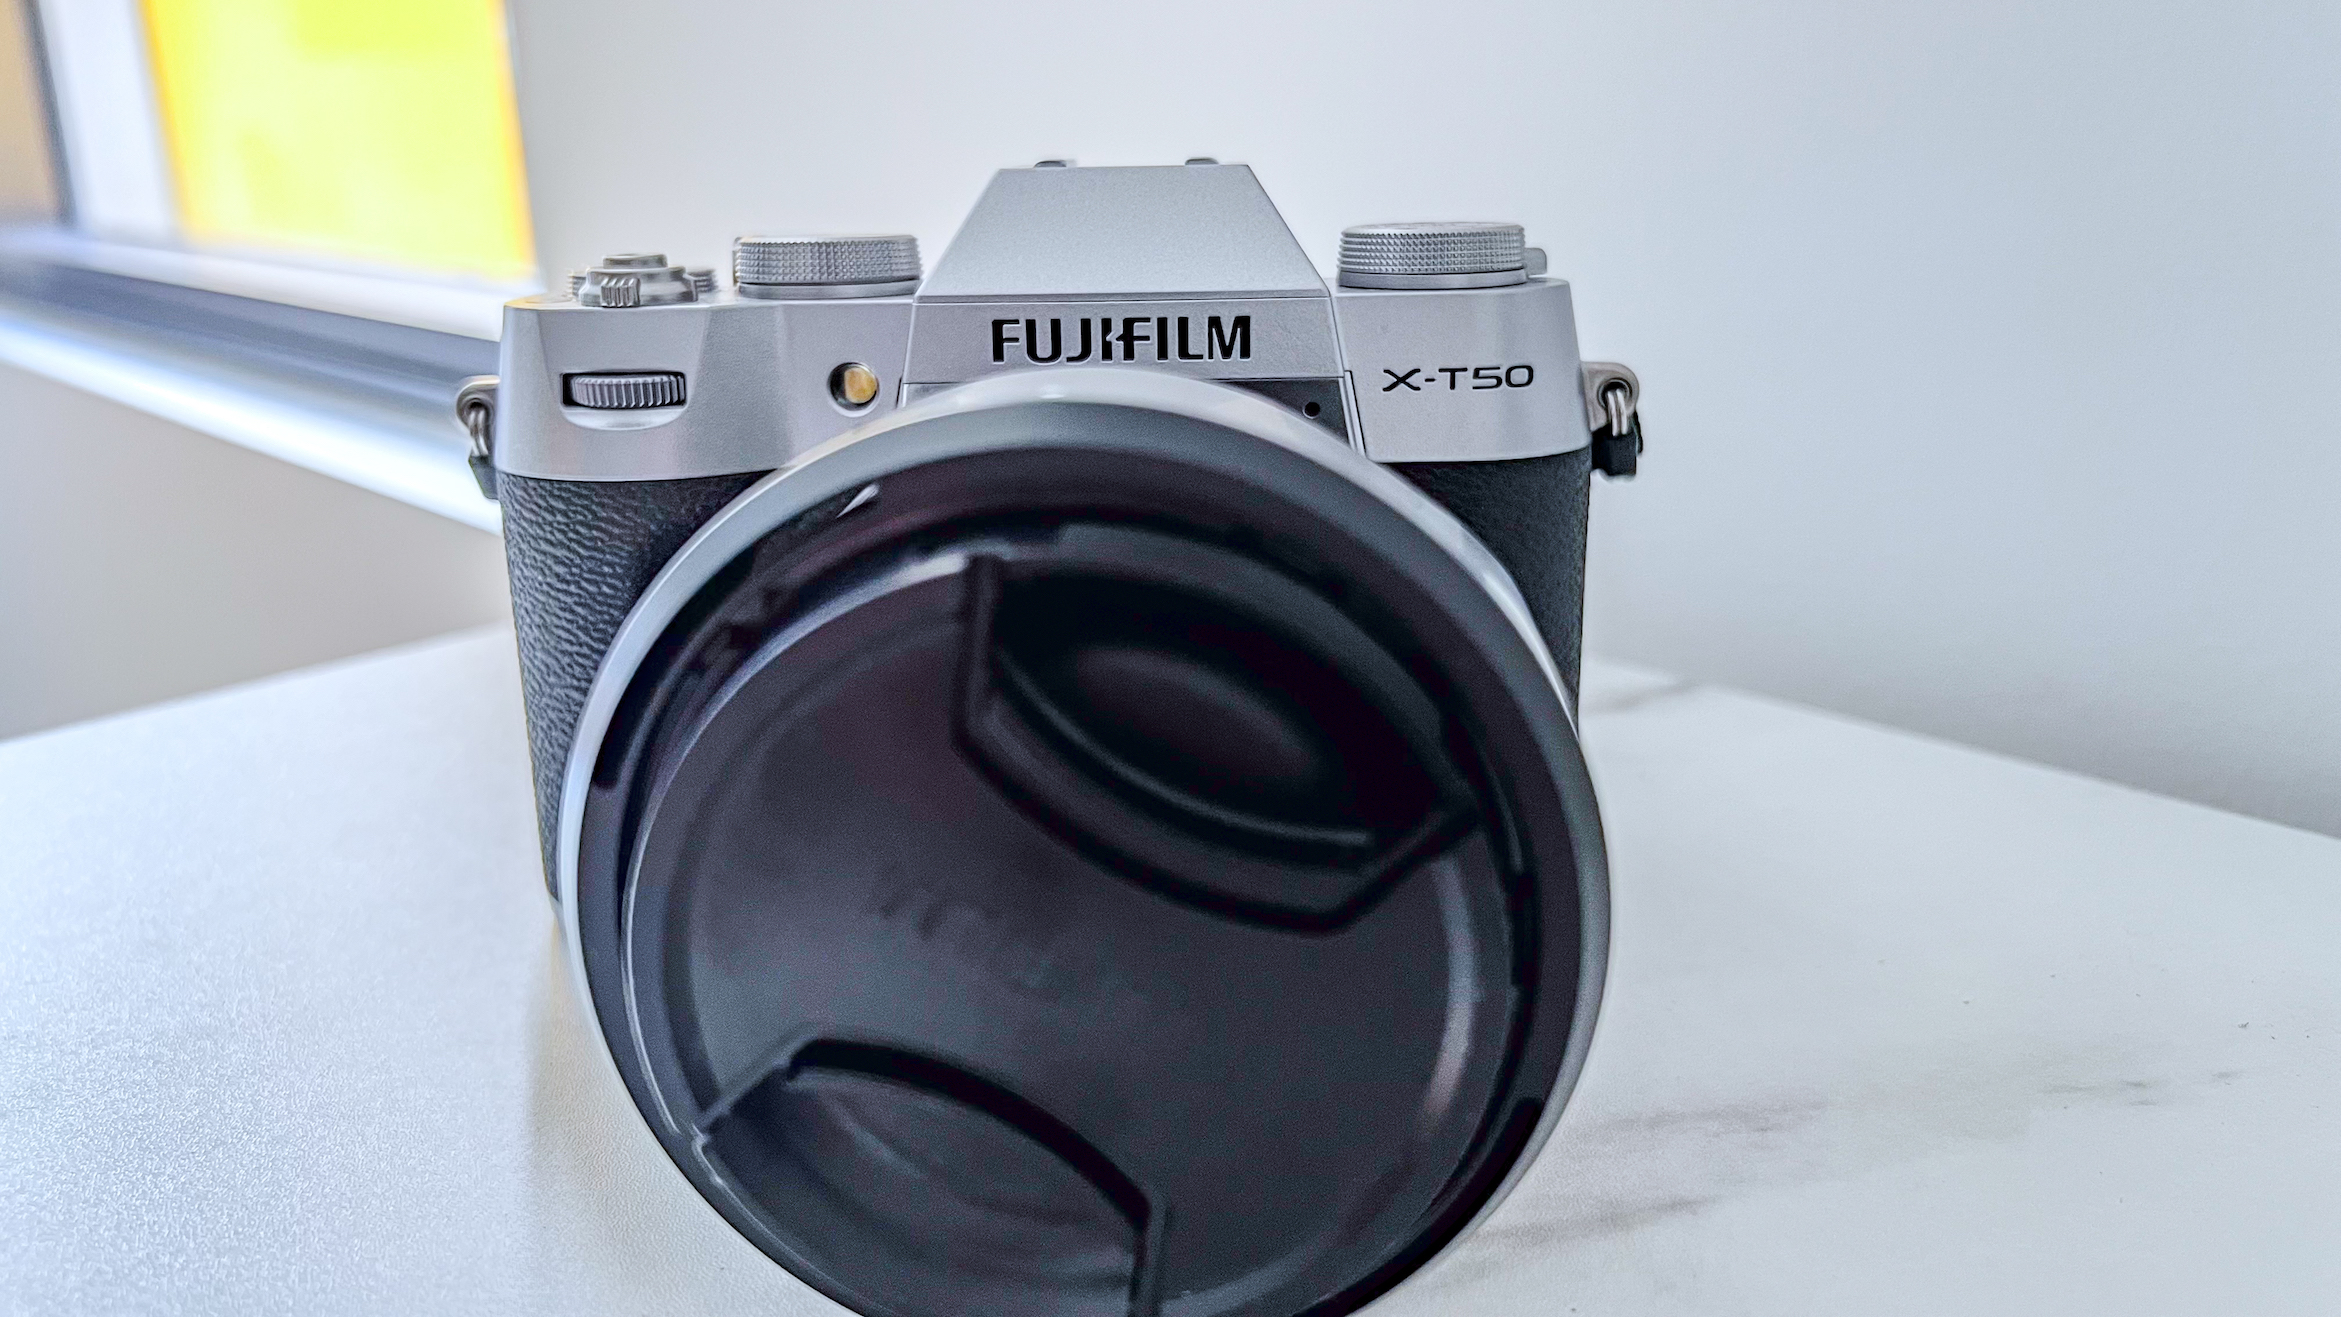 Branding on the top of the Fujifilm X-T50 body